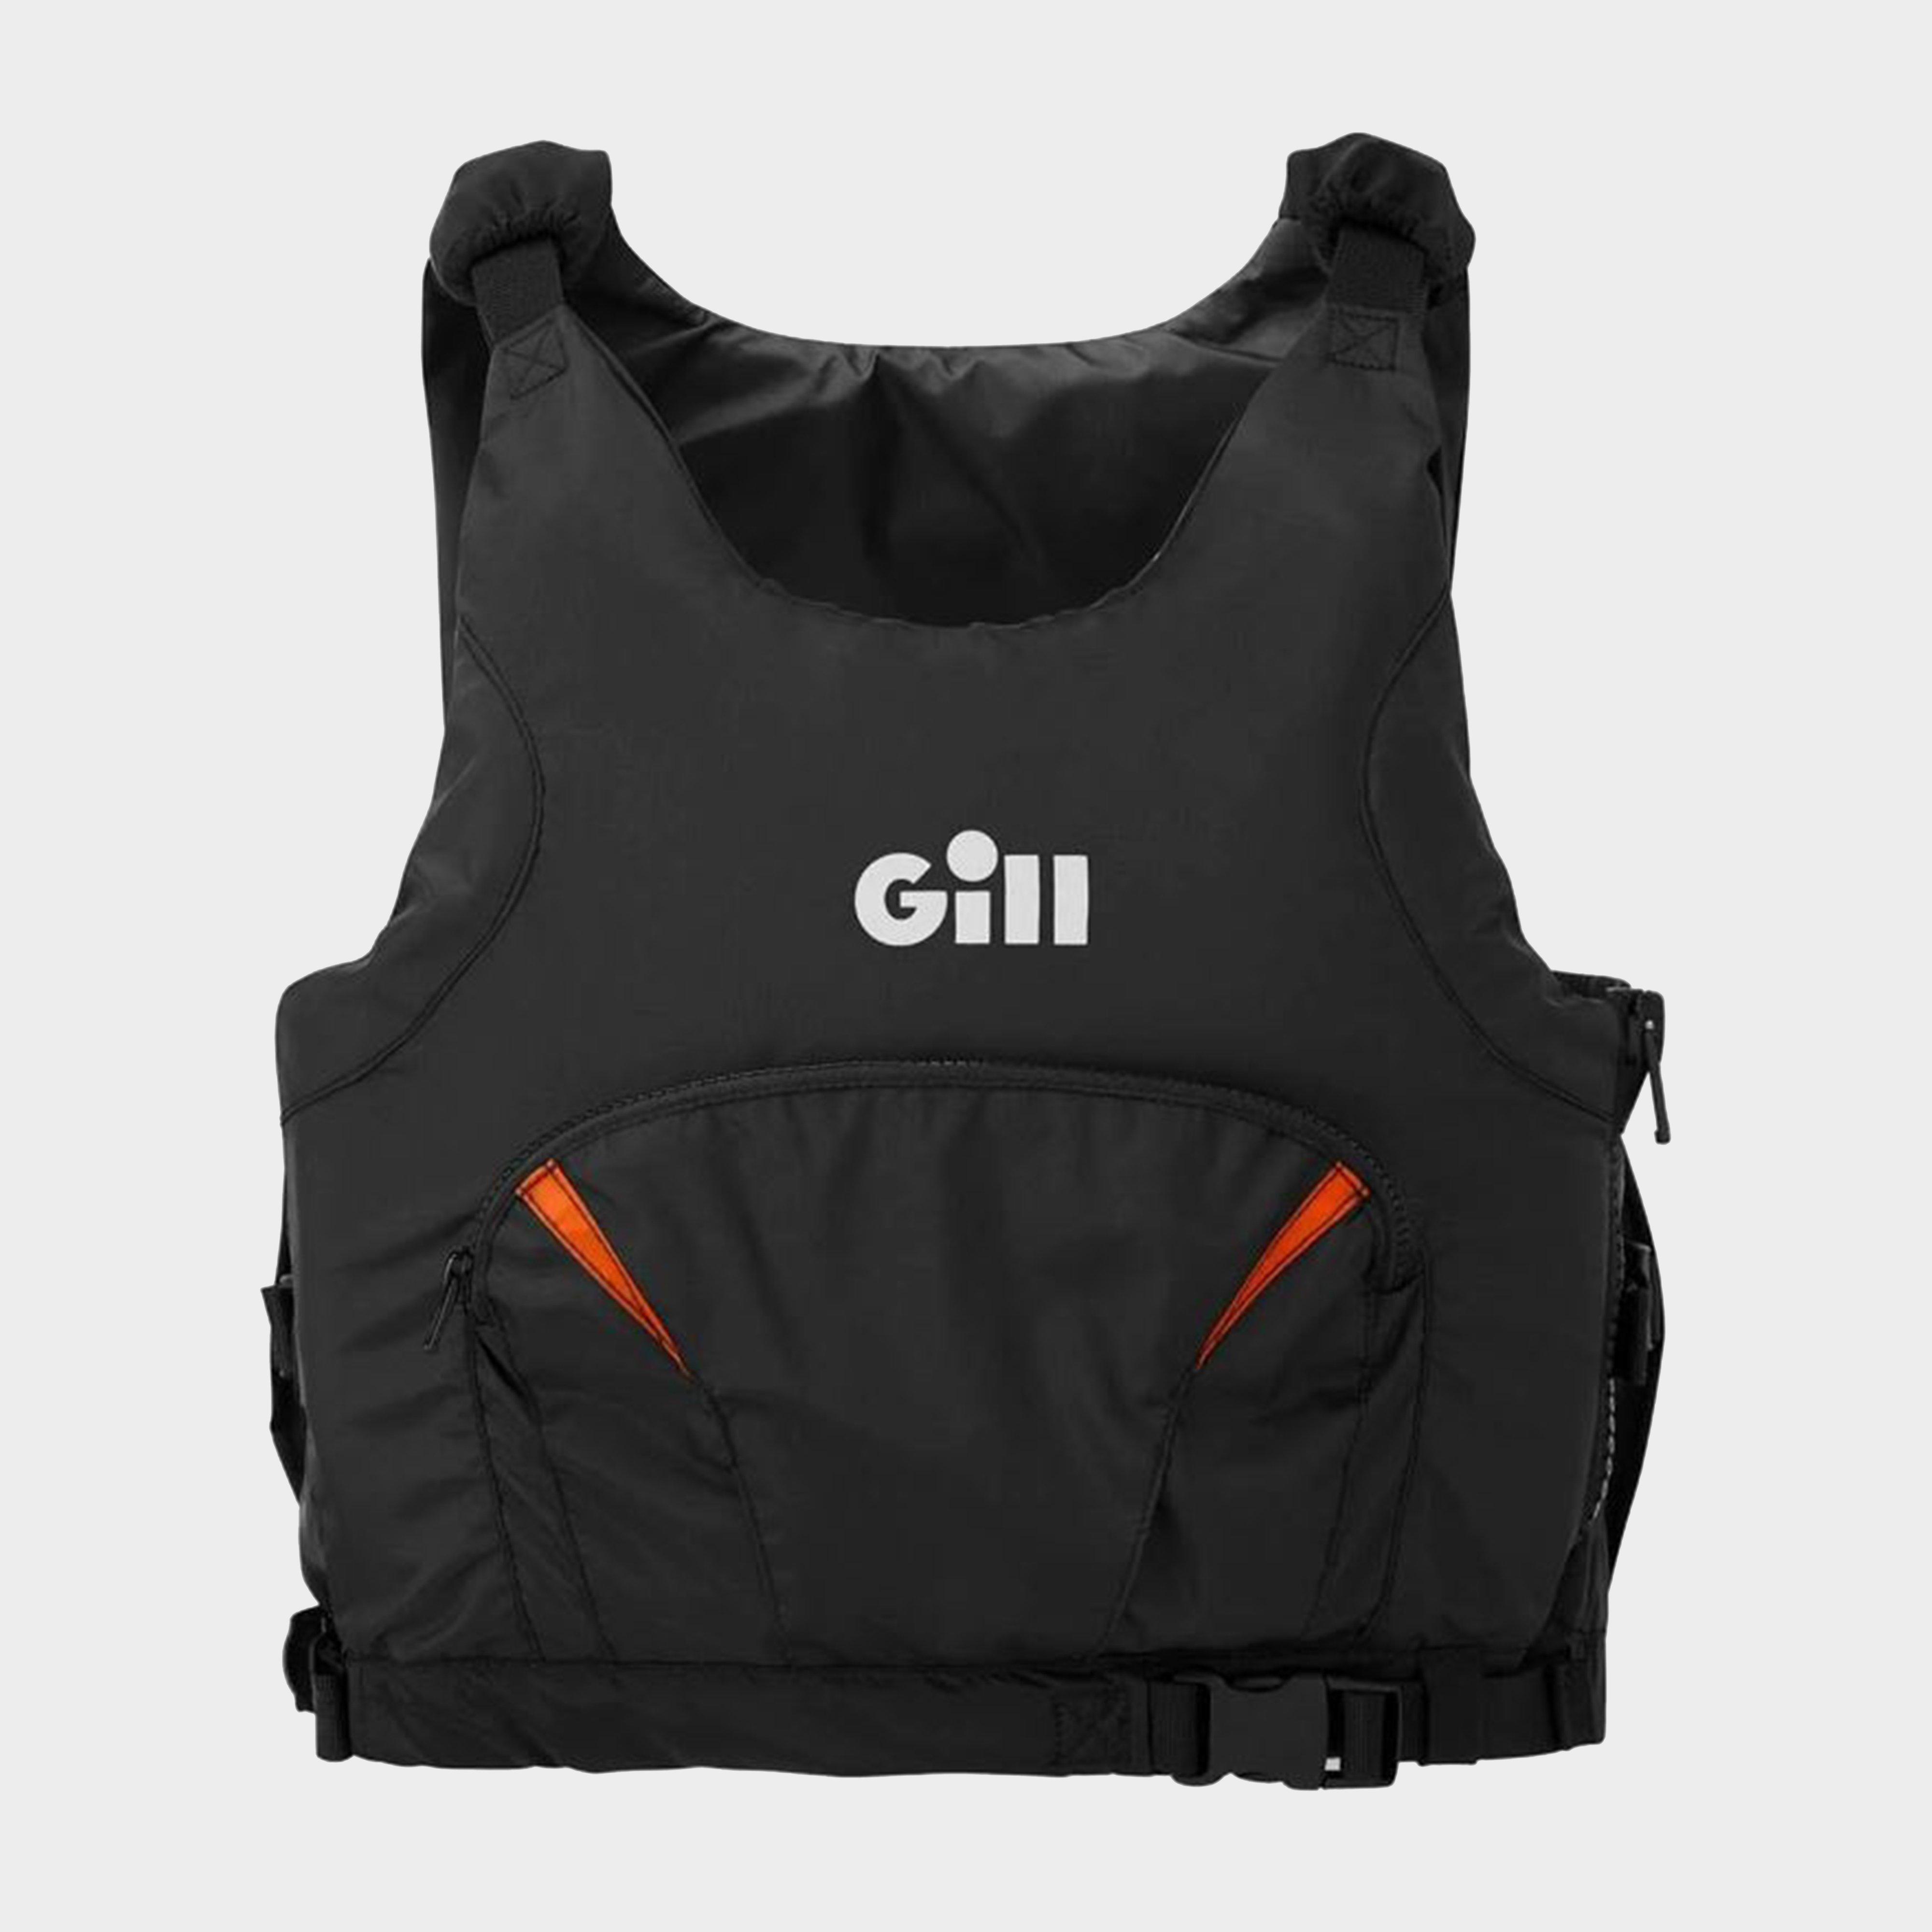 Gill Gill Pro Racer Pursuit Buoyancy Aid - Pfd, PFD